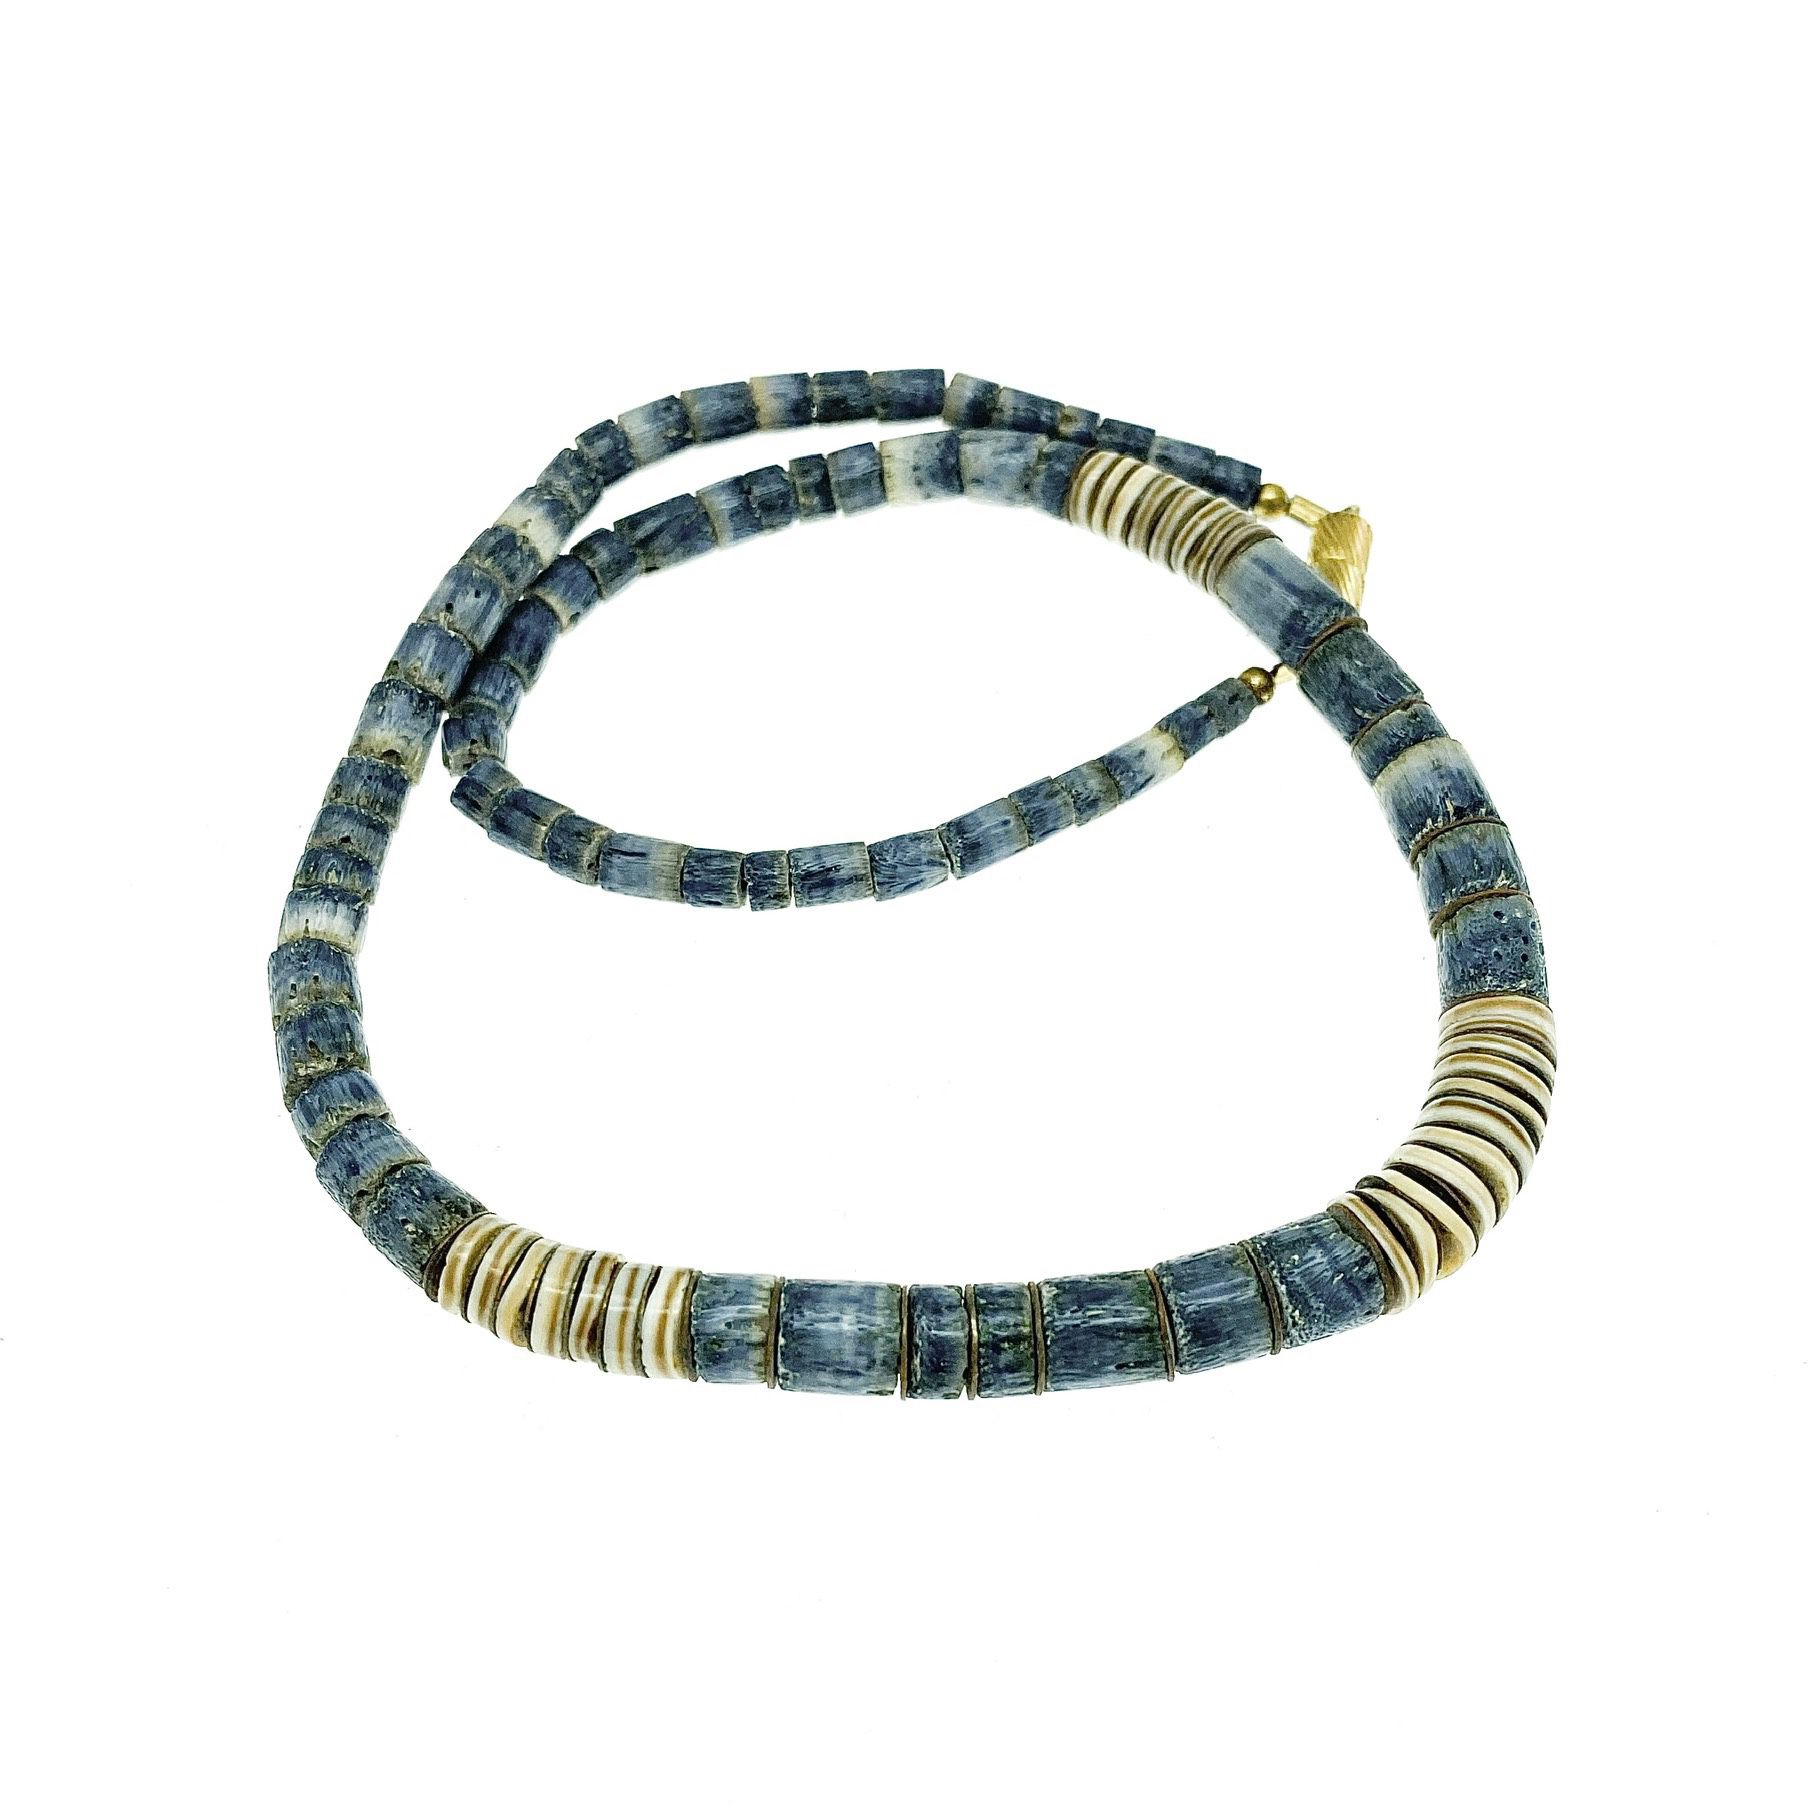 Vintage Blue Coral Heishi Beads Necklace, Southwestern Style, Boho Hippie Collar 